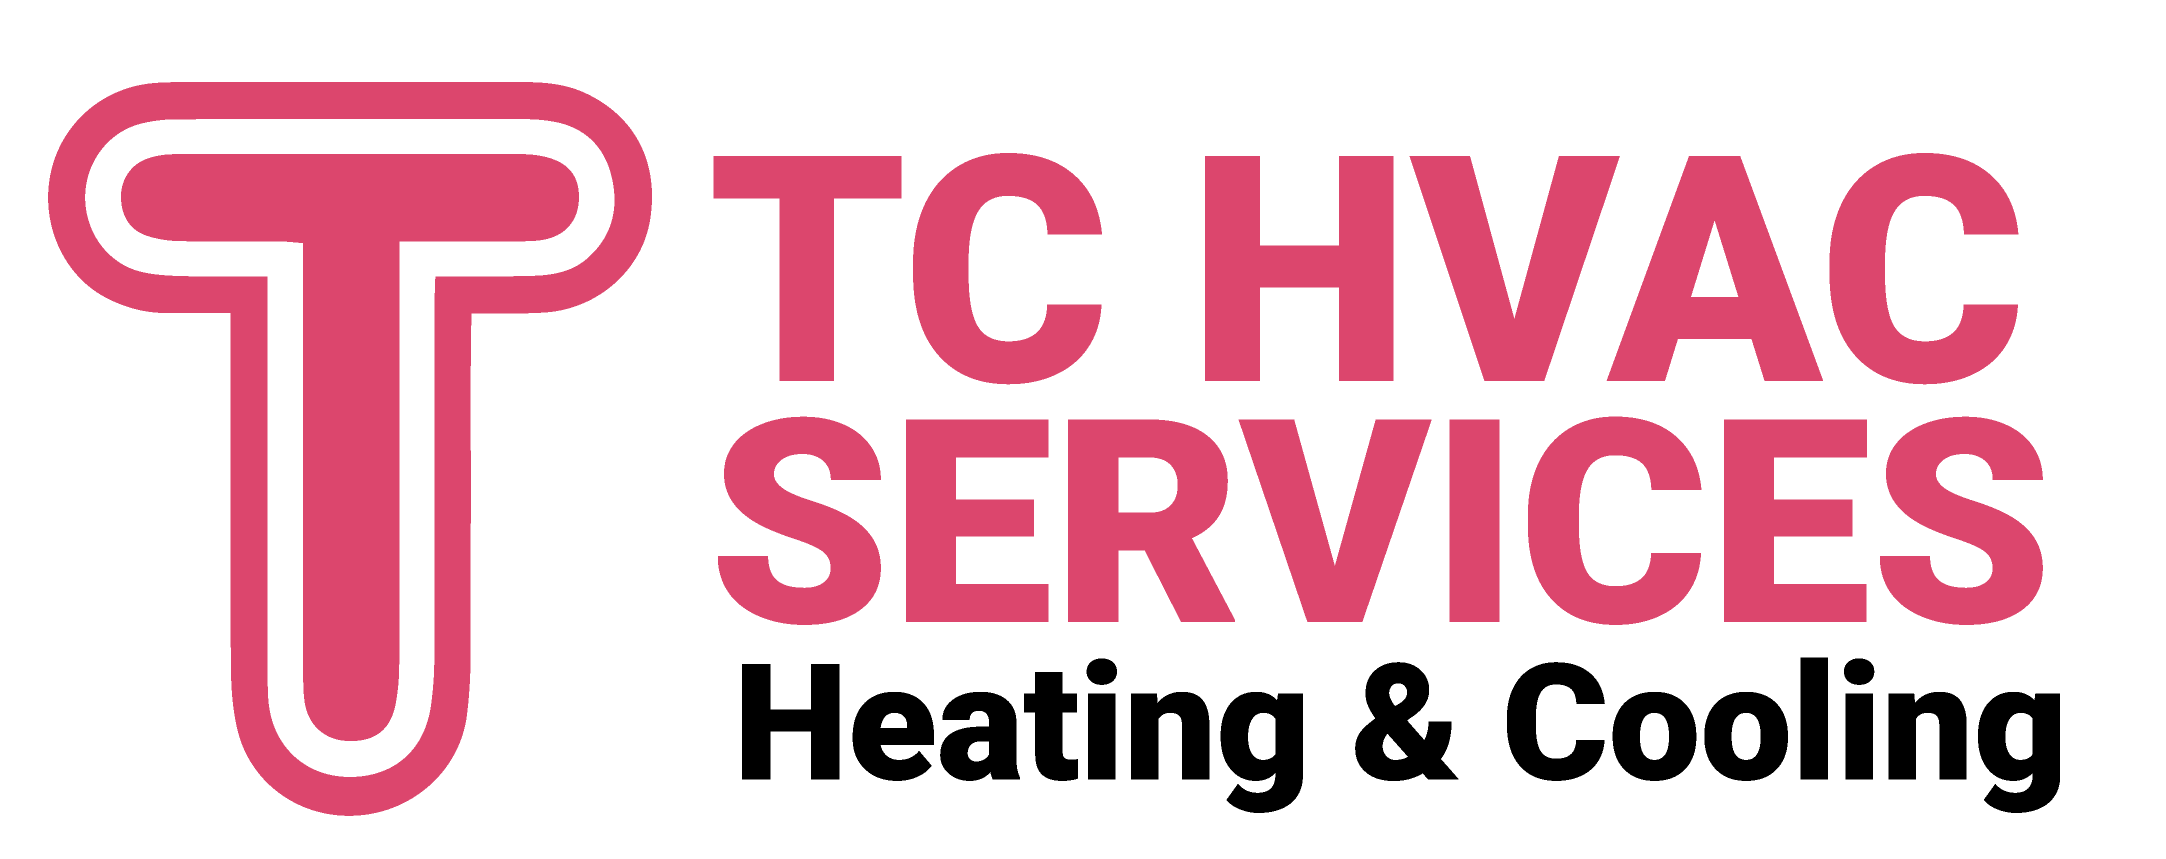 TC HVAC | Professional HVAC Services in Northern Virginia